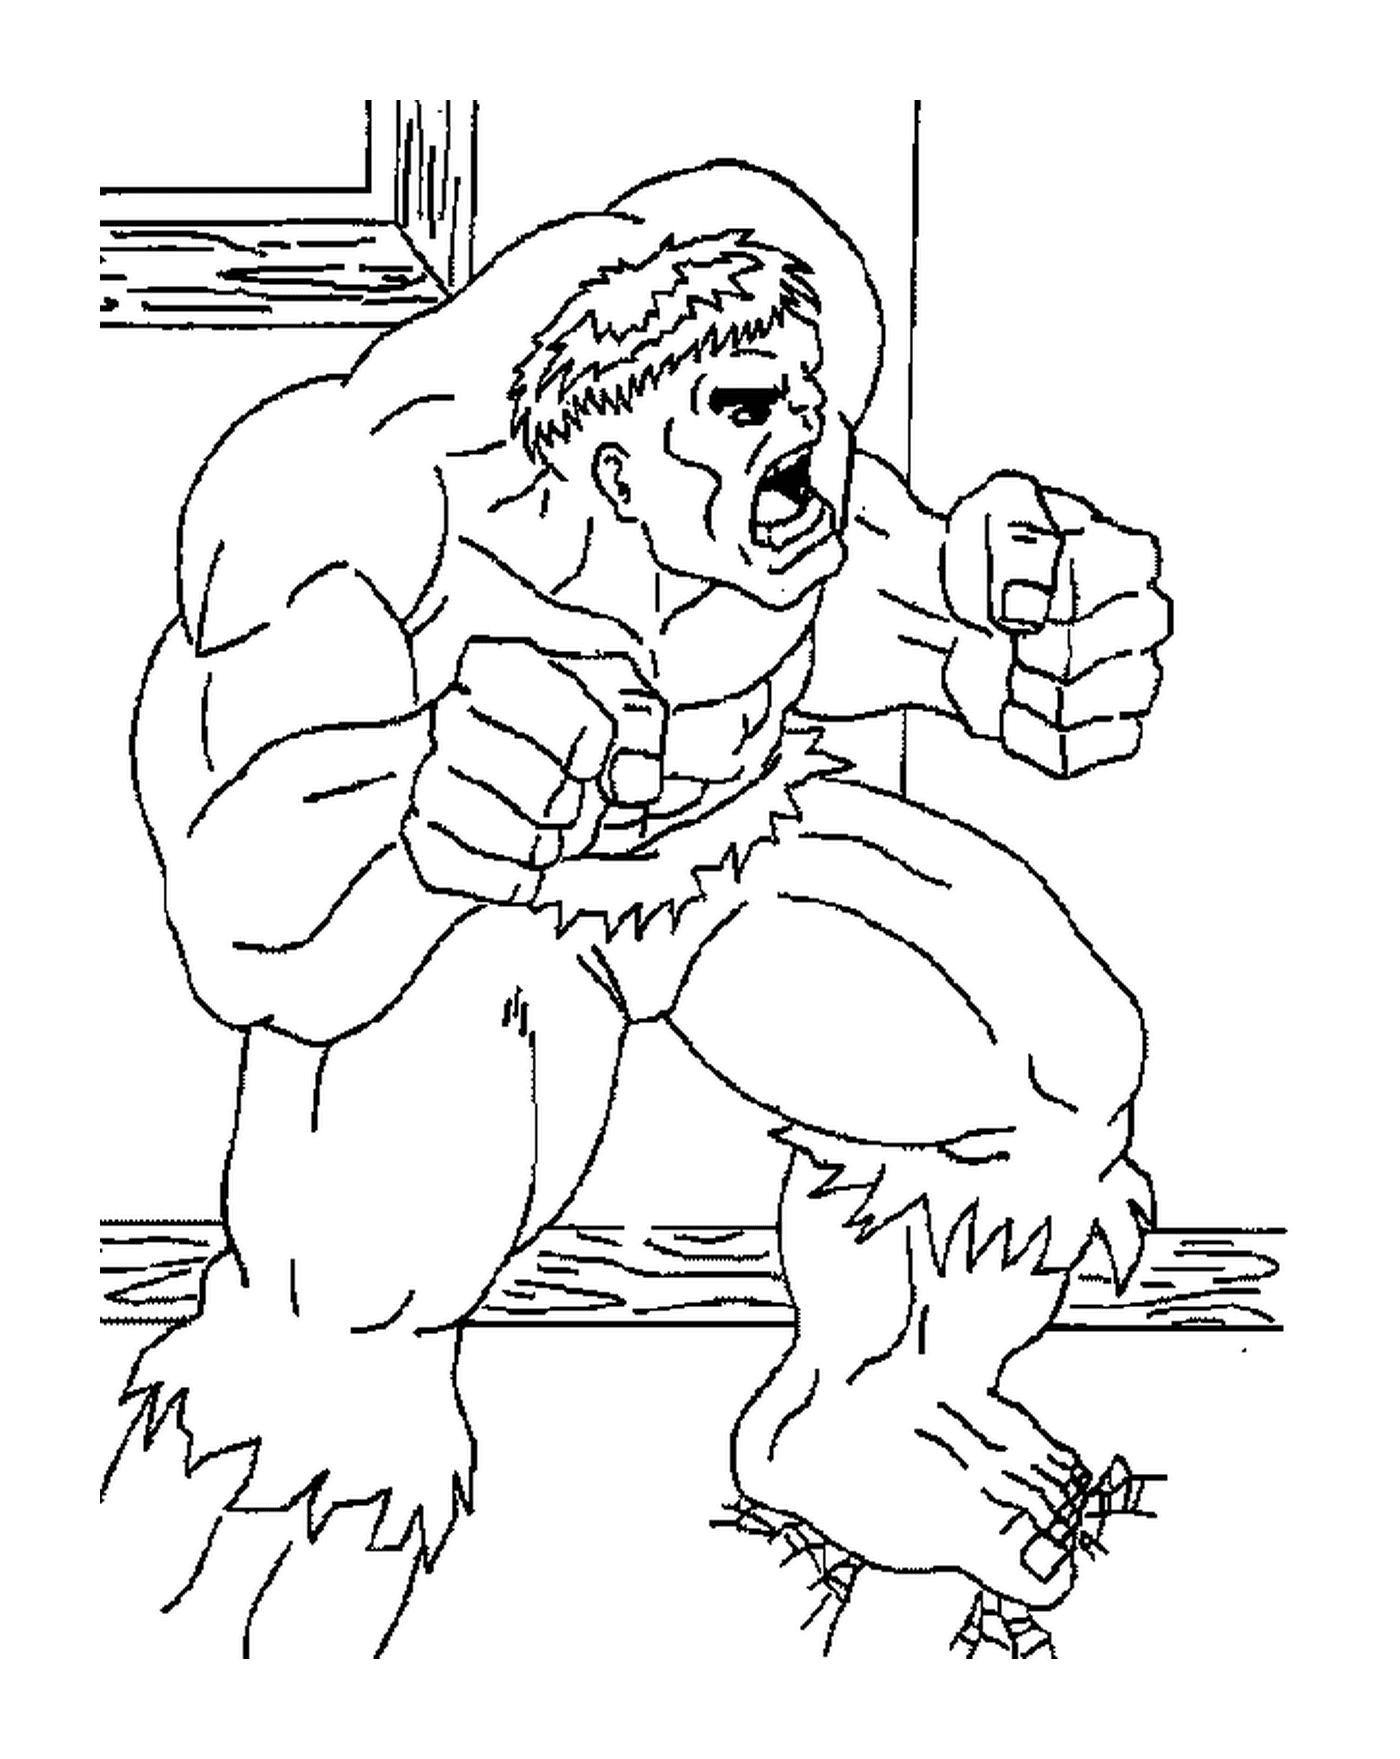  Hulk holding a fist 